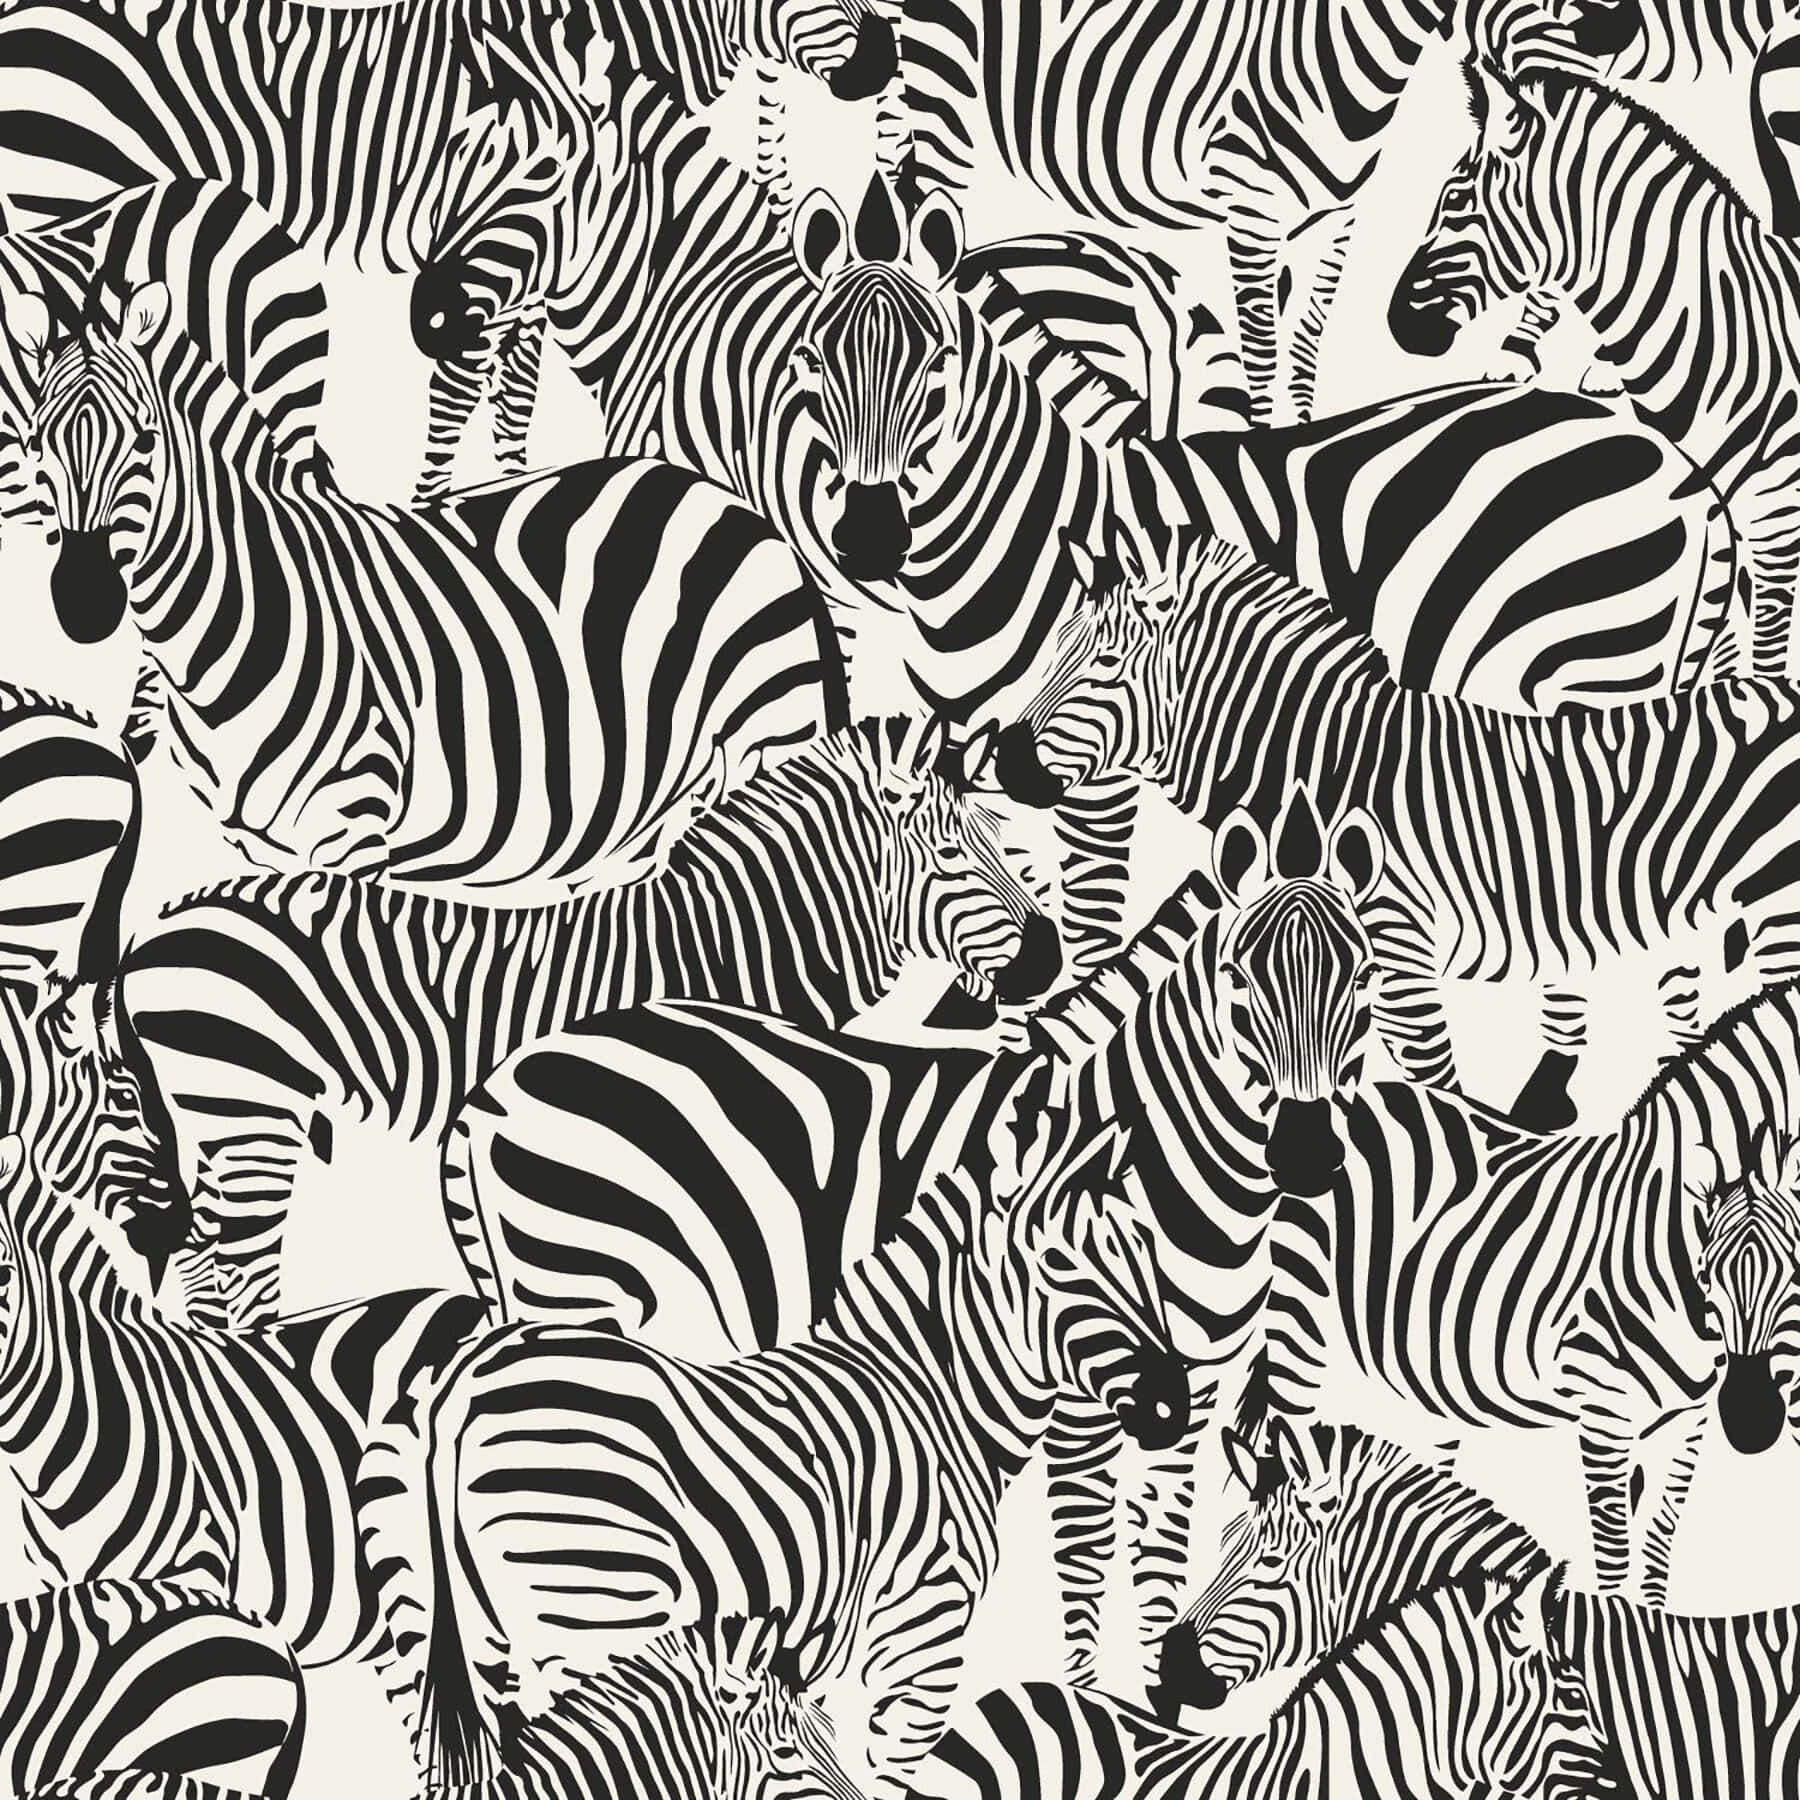 A vibrant black and white animal print design. Wallpaper